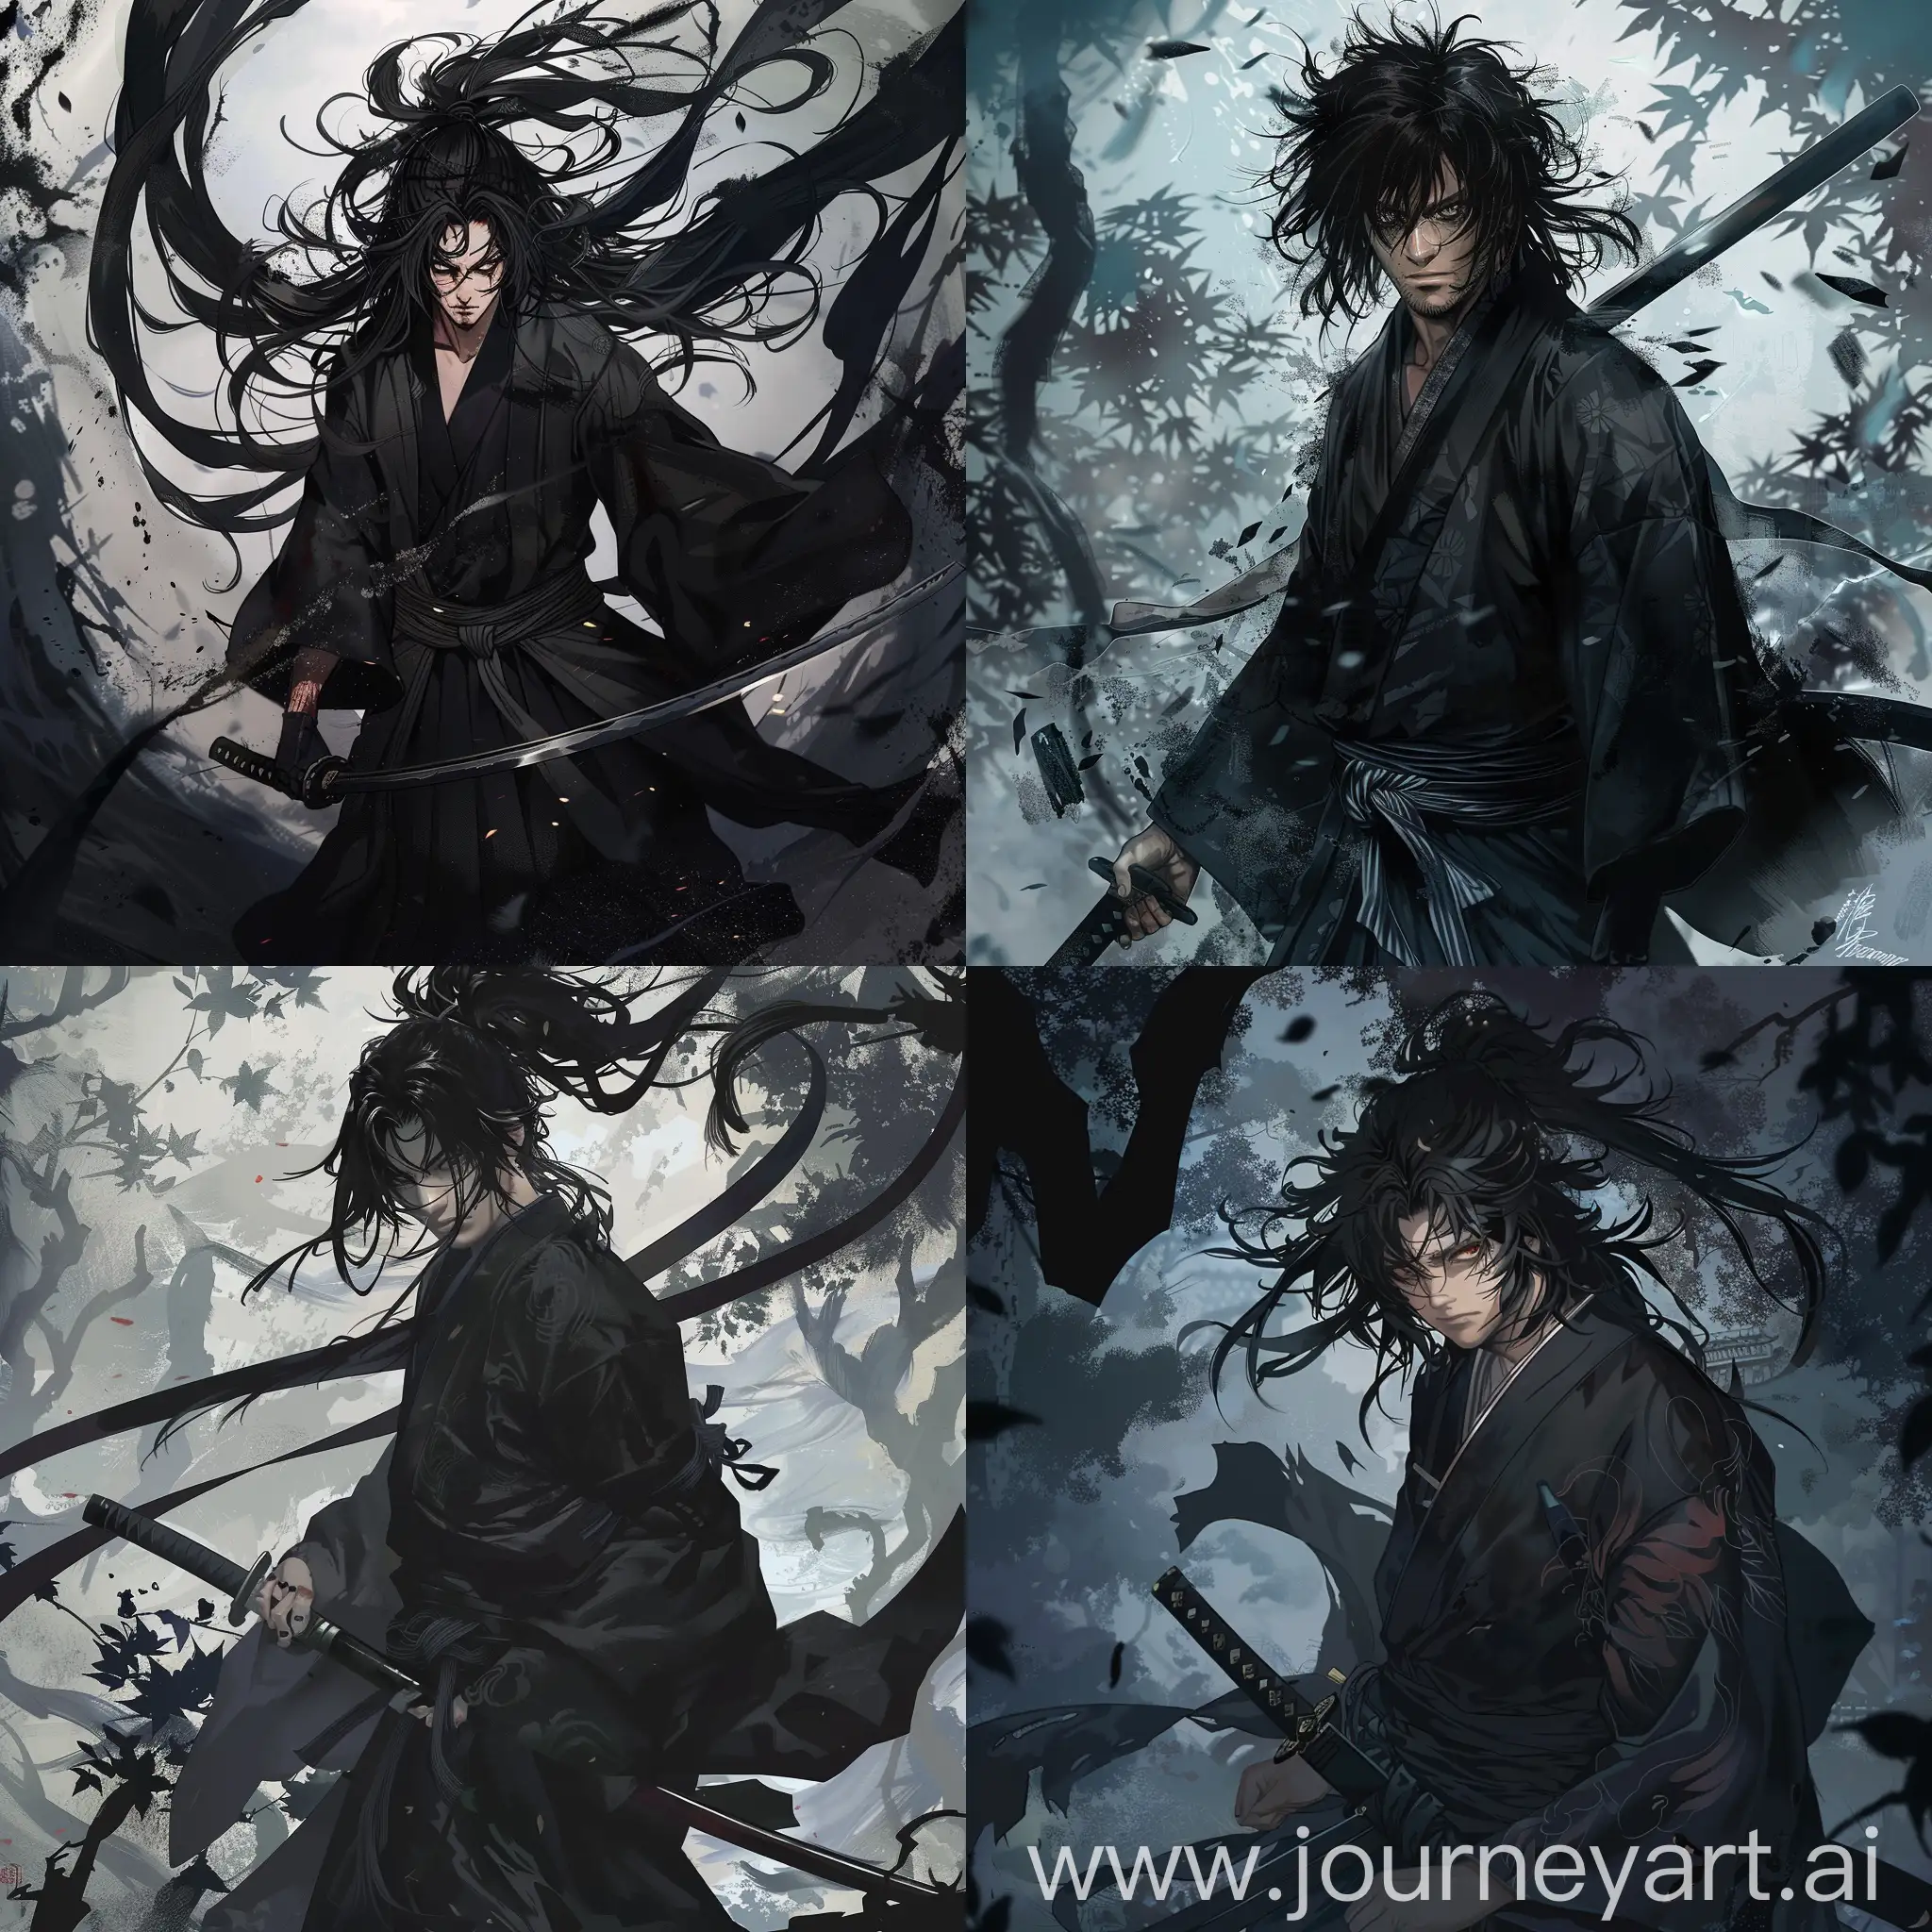 Black haired male, full body, black kimono, black katana, vagabond manga style, surrounded by shadows, anger and sadness